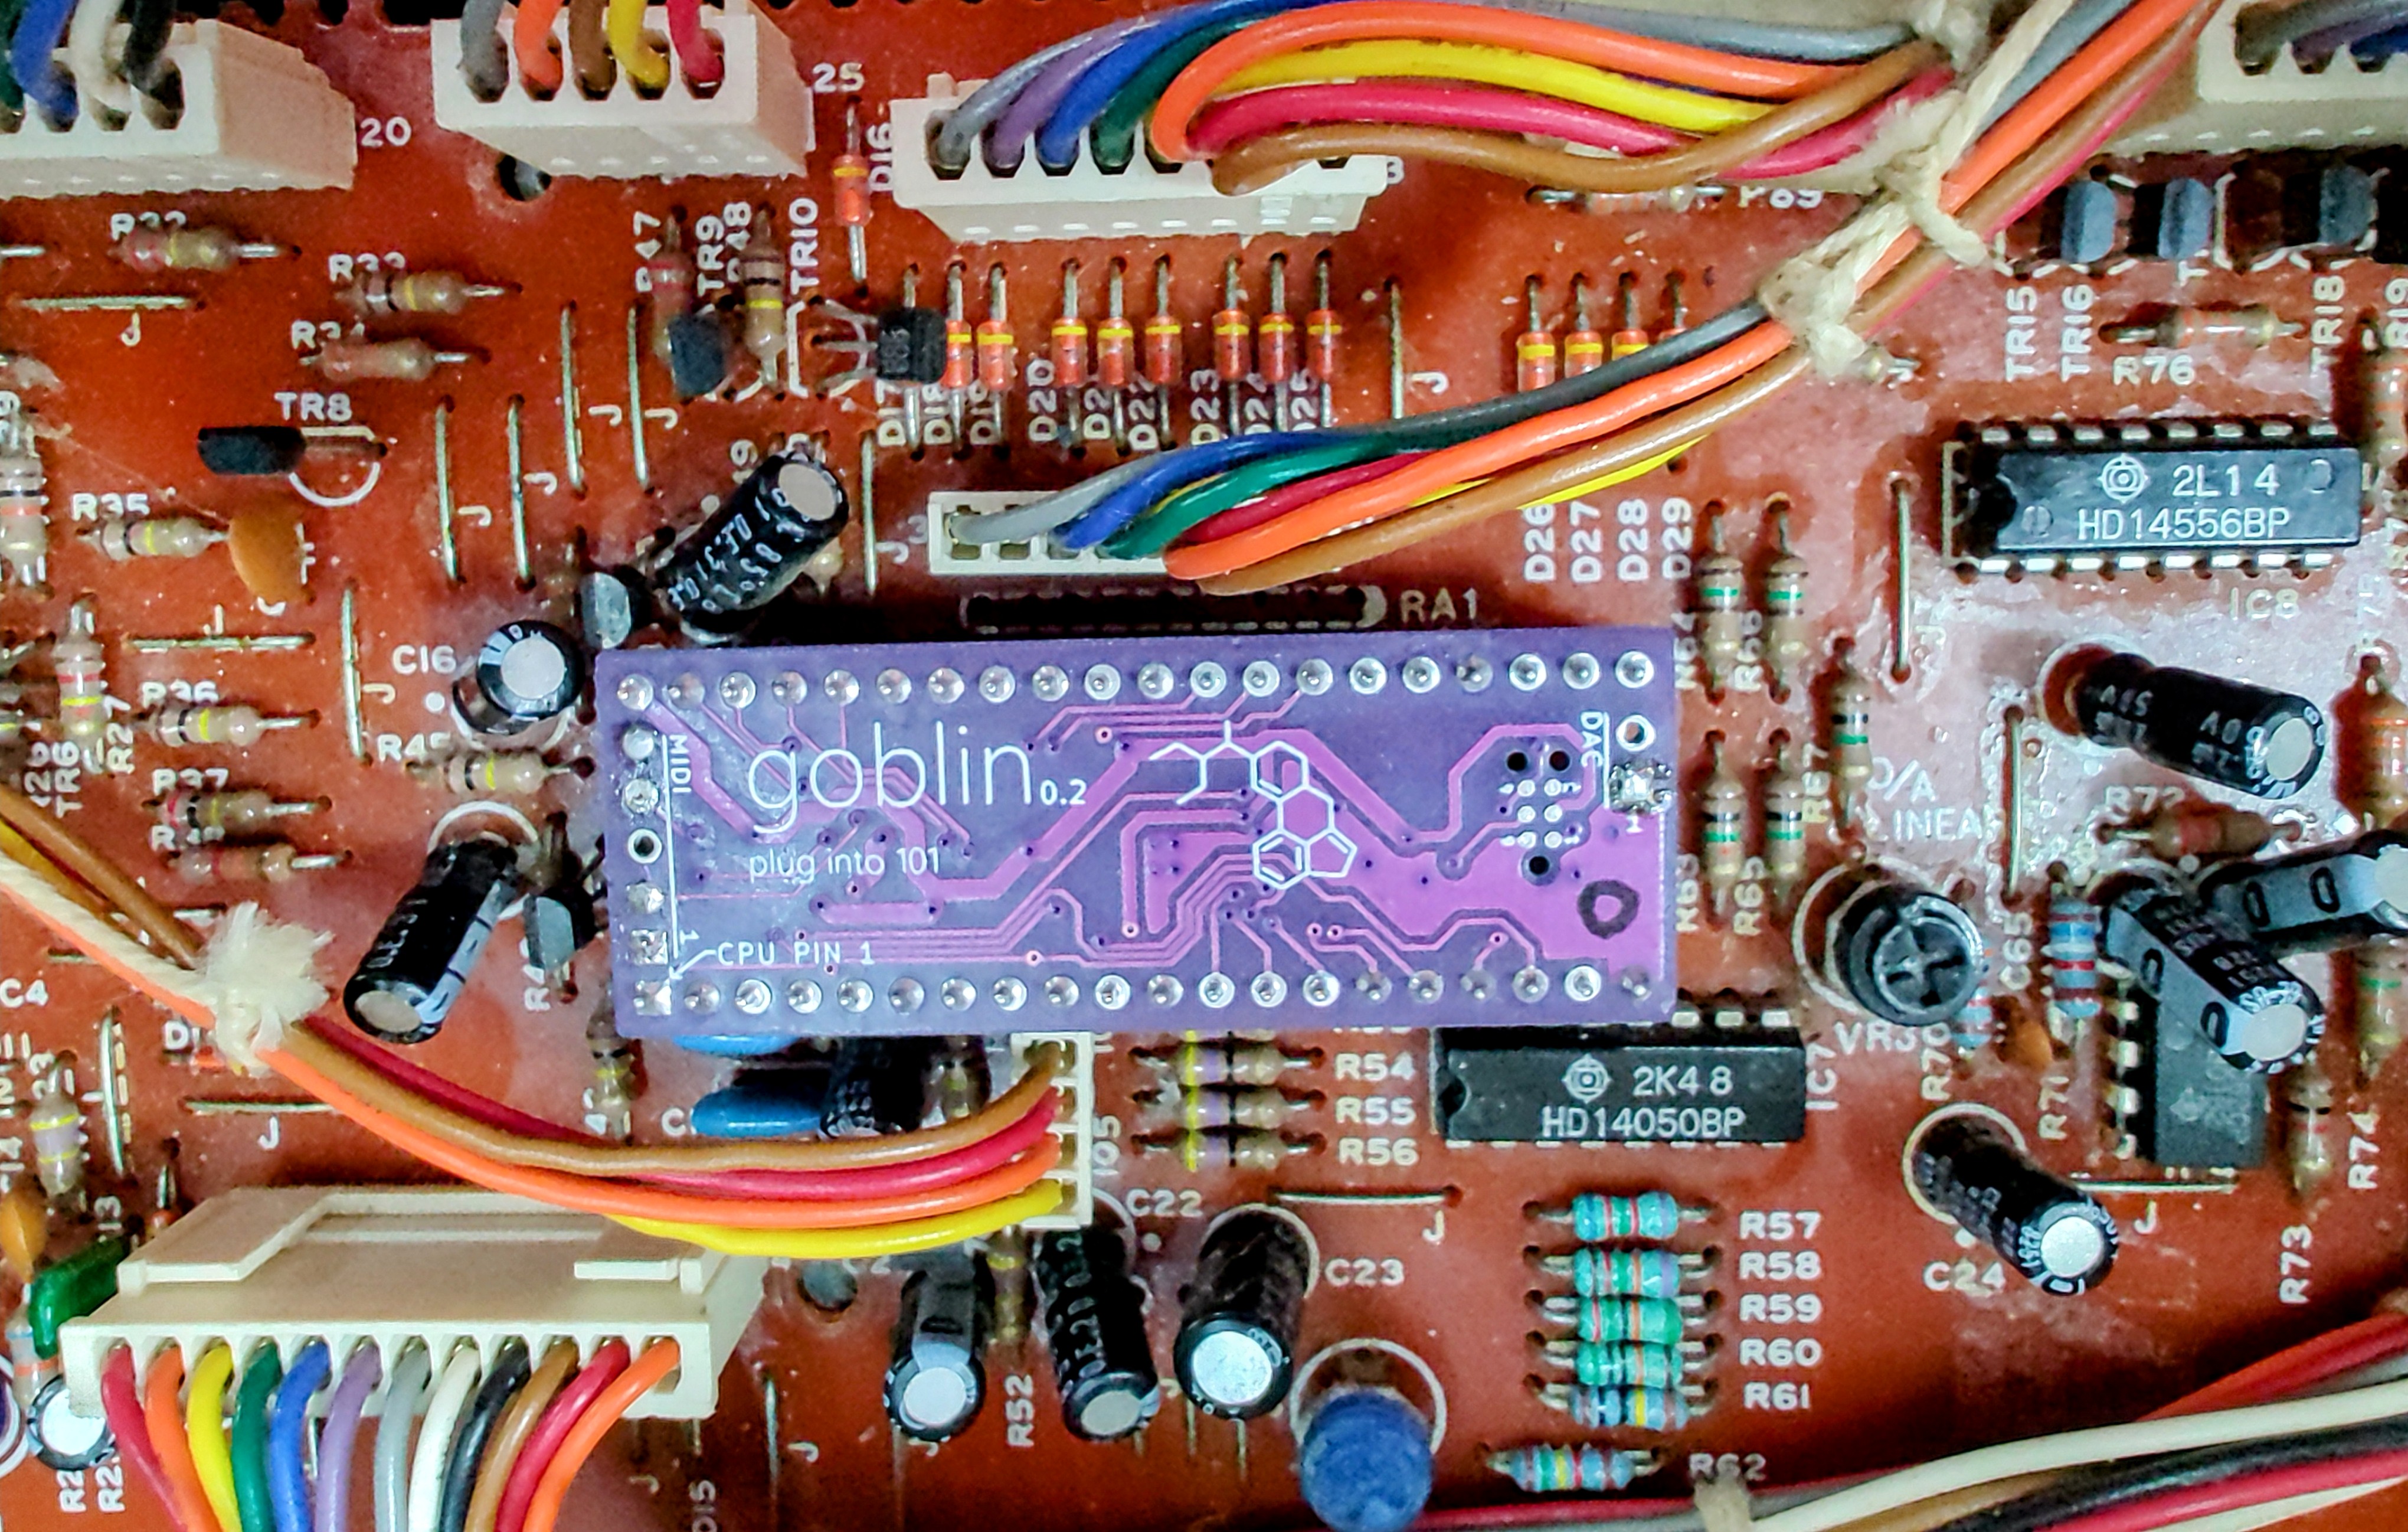 Goblin PCB orientation